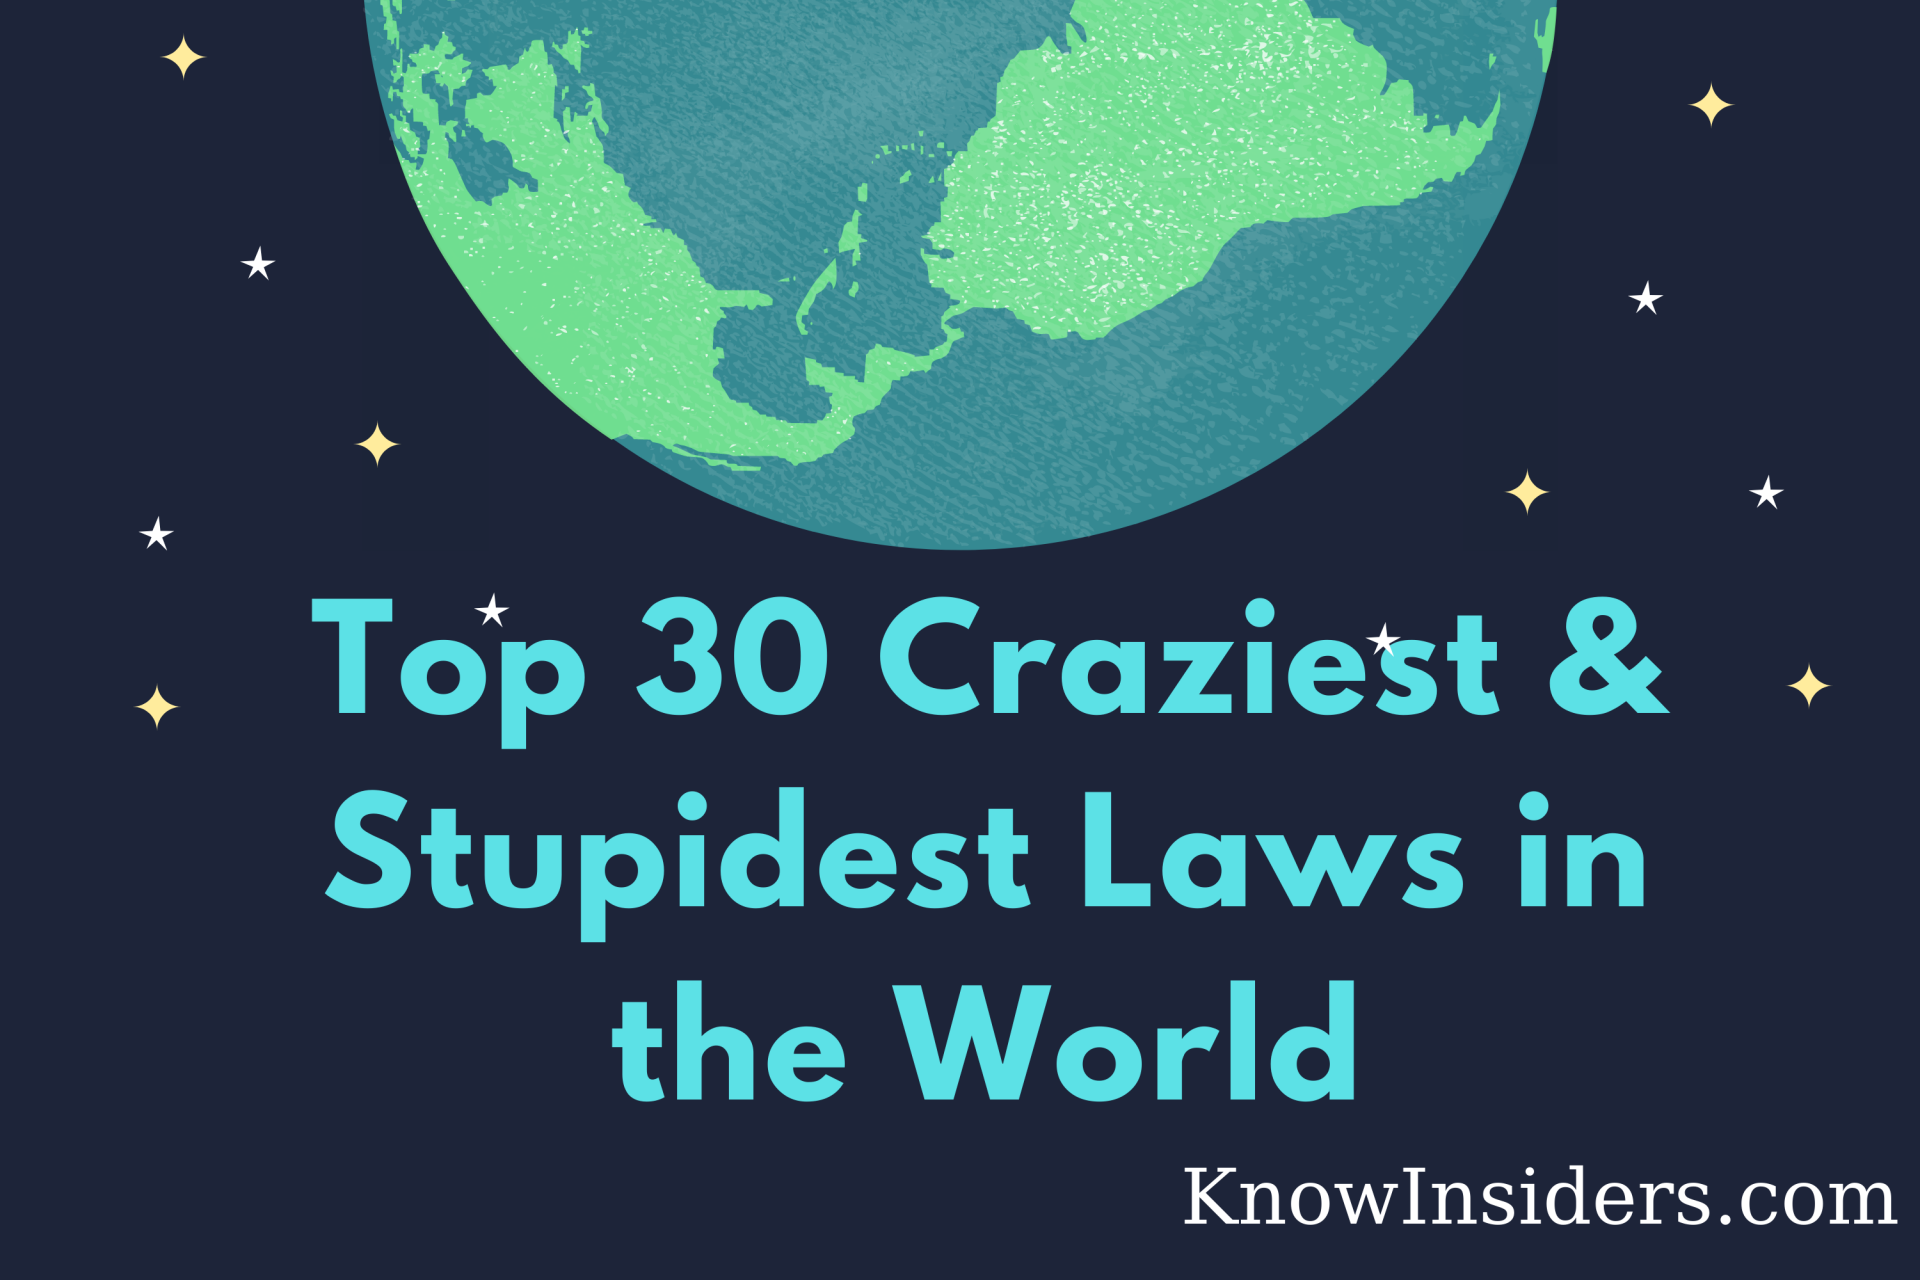 Top 30 Craziet and Weirdest Laws in the World